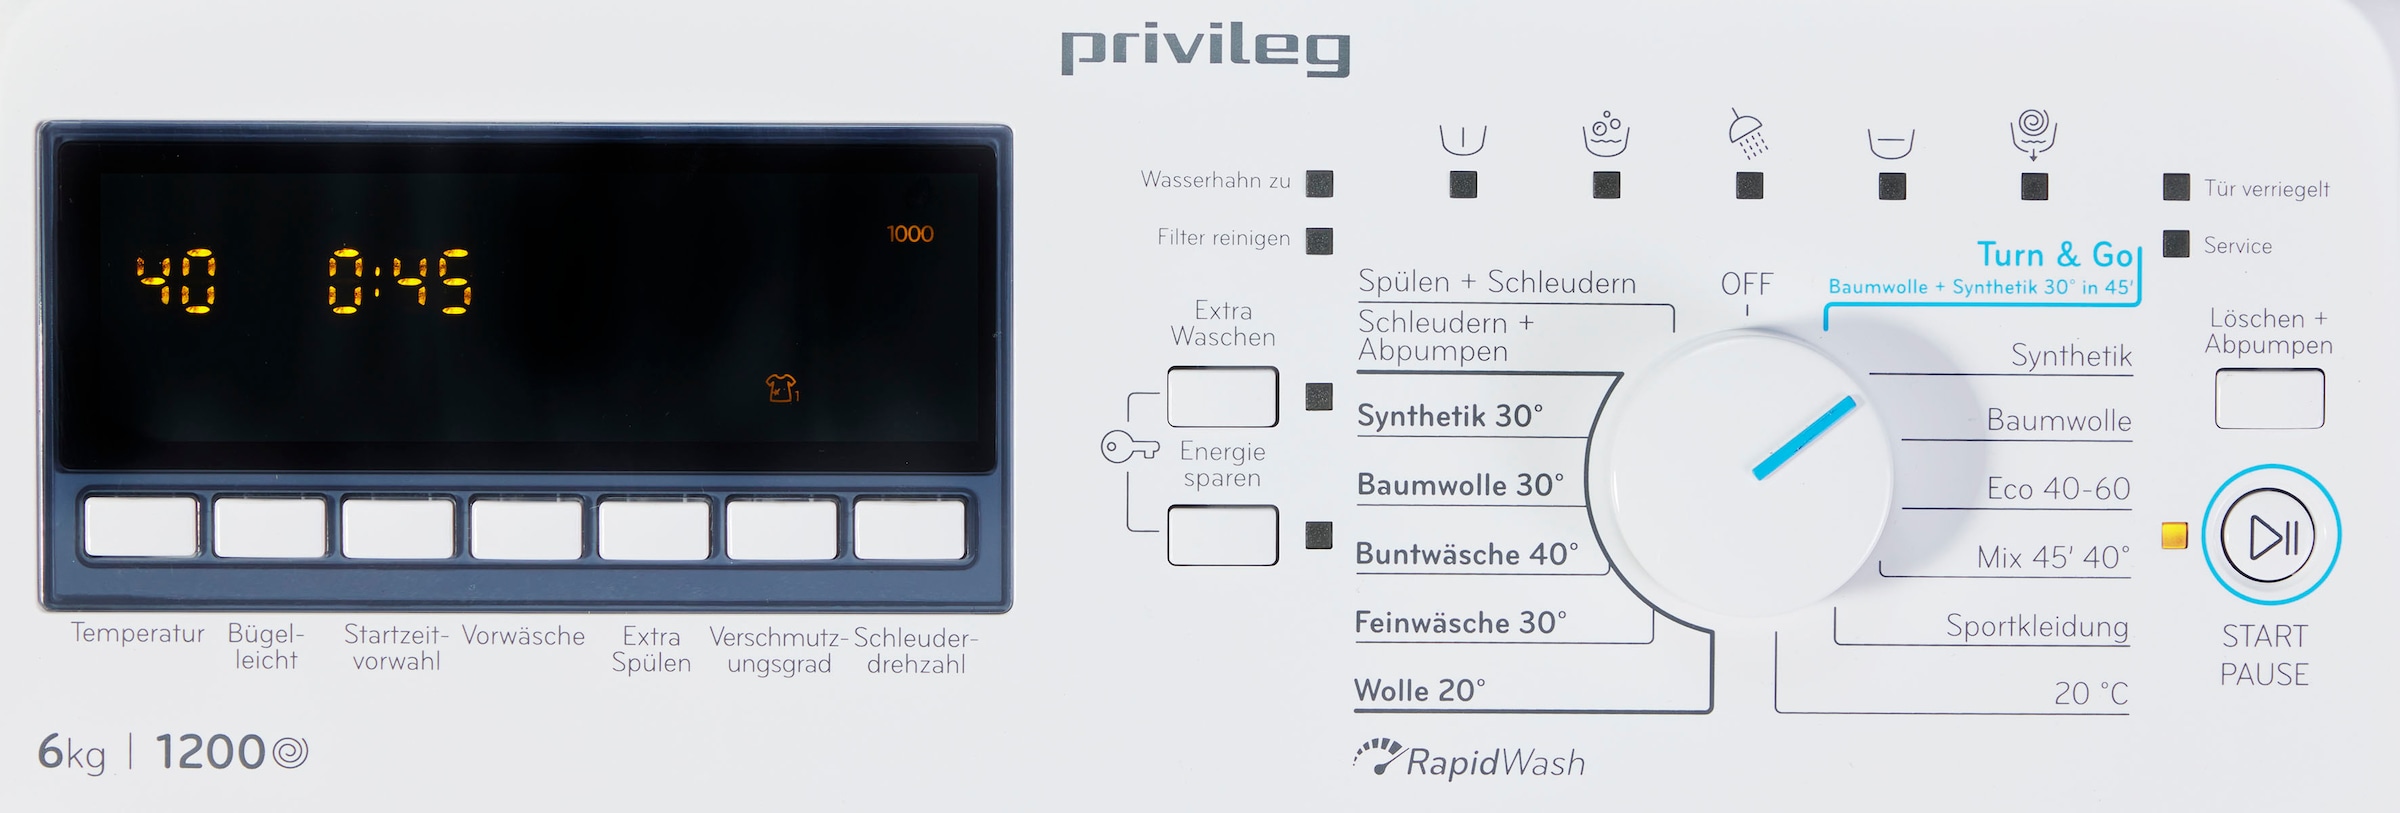 Privileg Waschmaschine N«, BAUR »PWT 6 PWT B6 Class auf S5 N, | Class Raten U/min S5 Toplader 1200 B6 kg